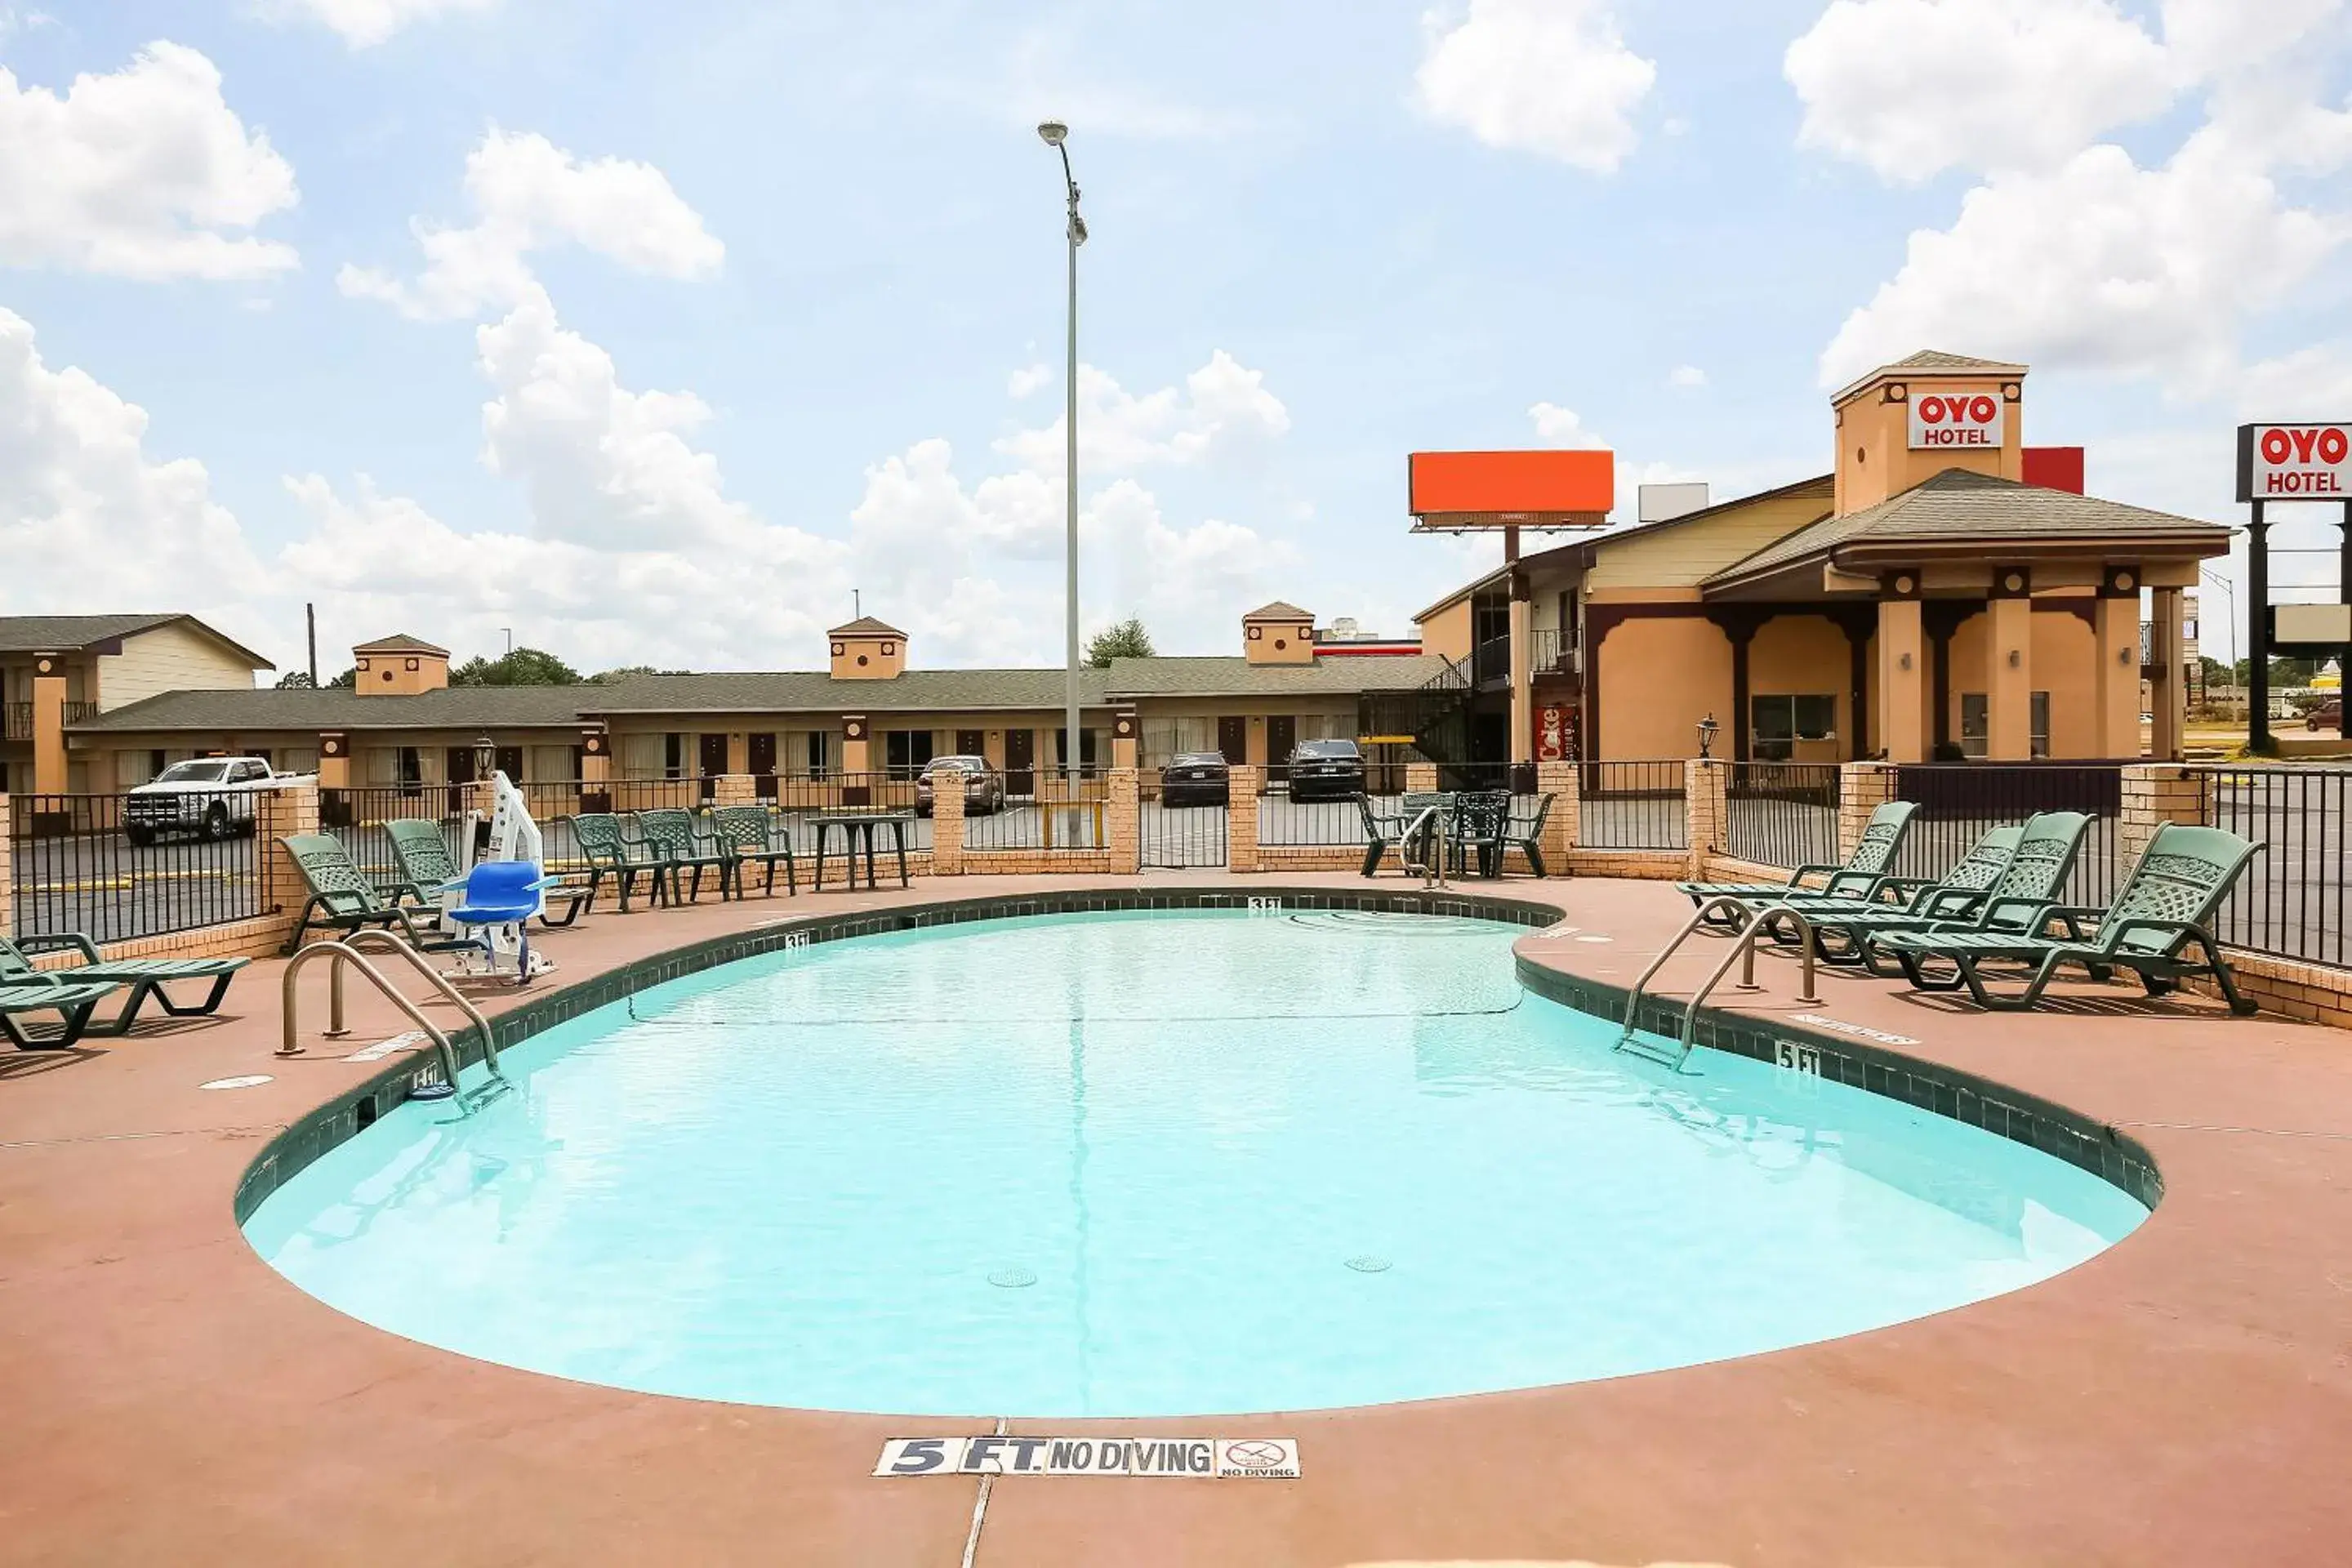 Pool view, Swimming Pool in OYO Hotel Texarkana North Heights AR Hwy I-30